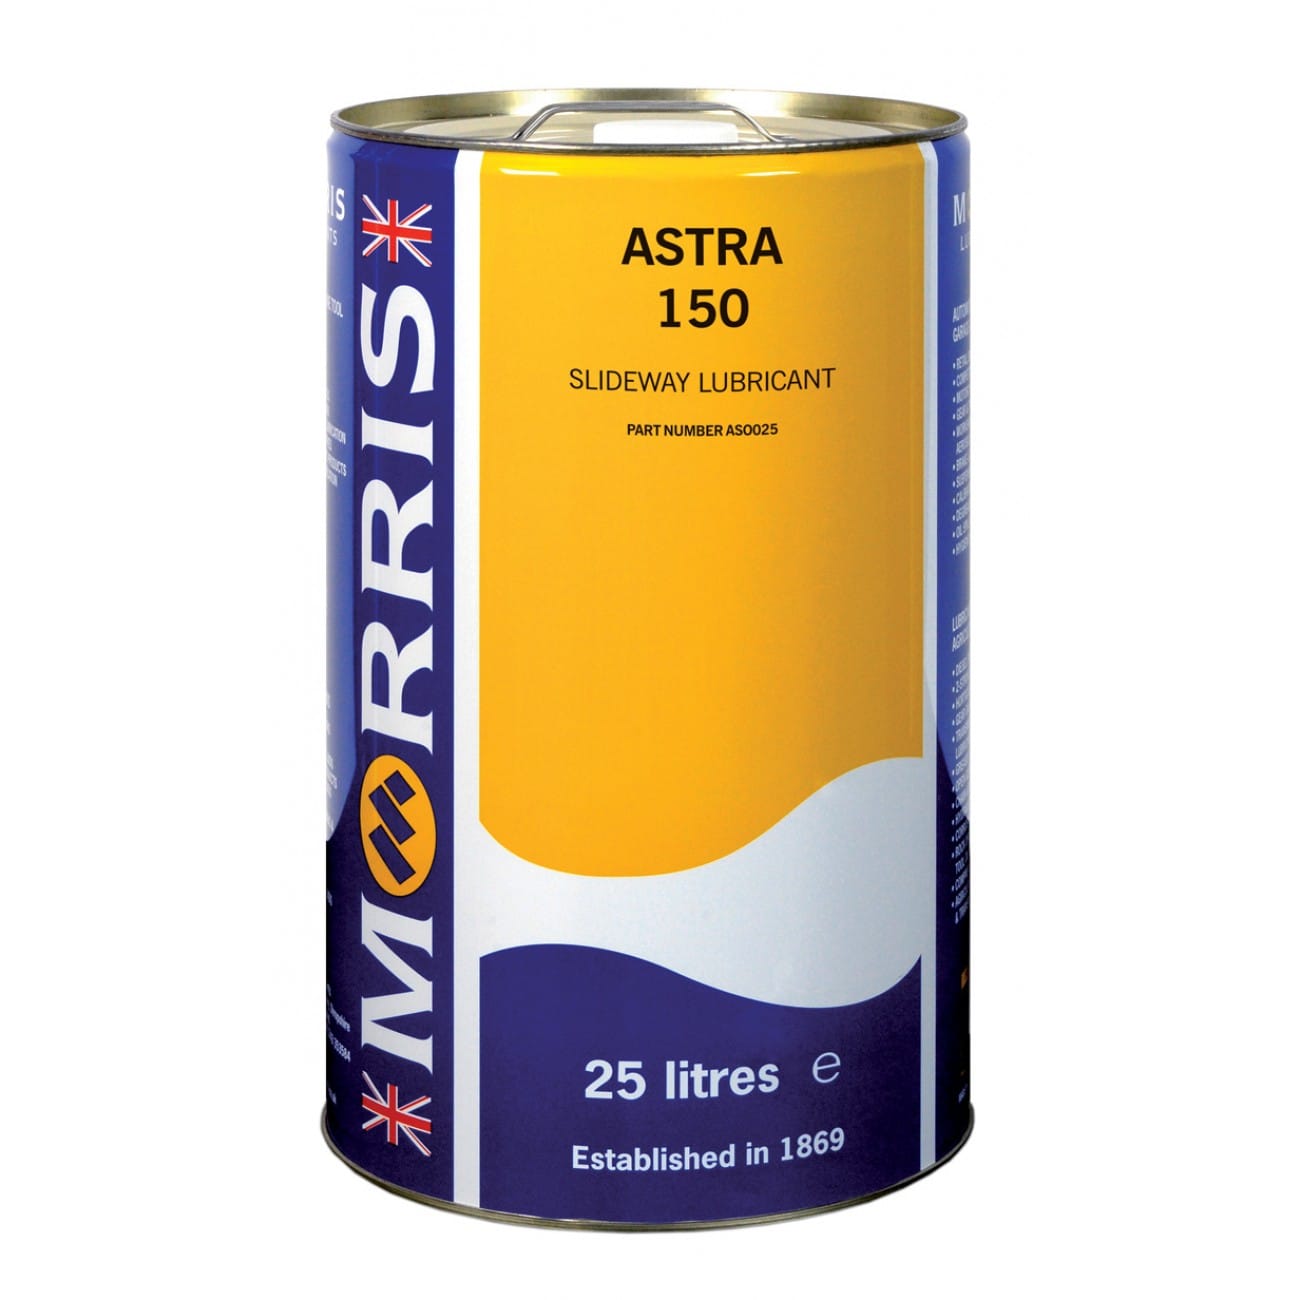 Astra 150 Slideway Oil